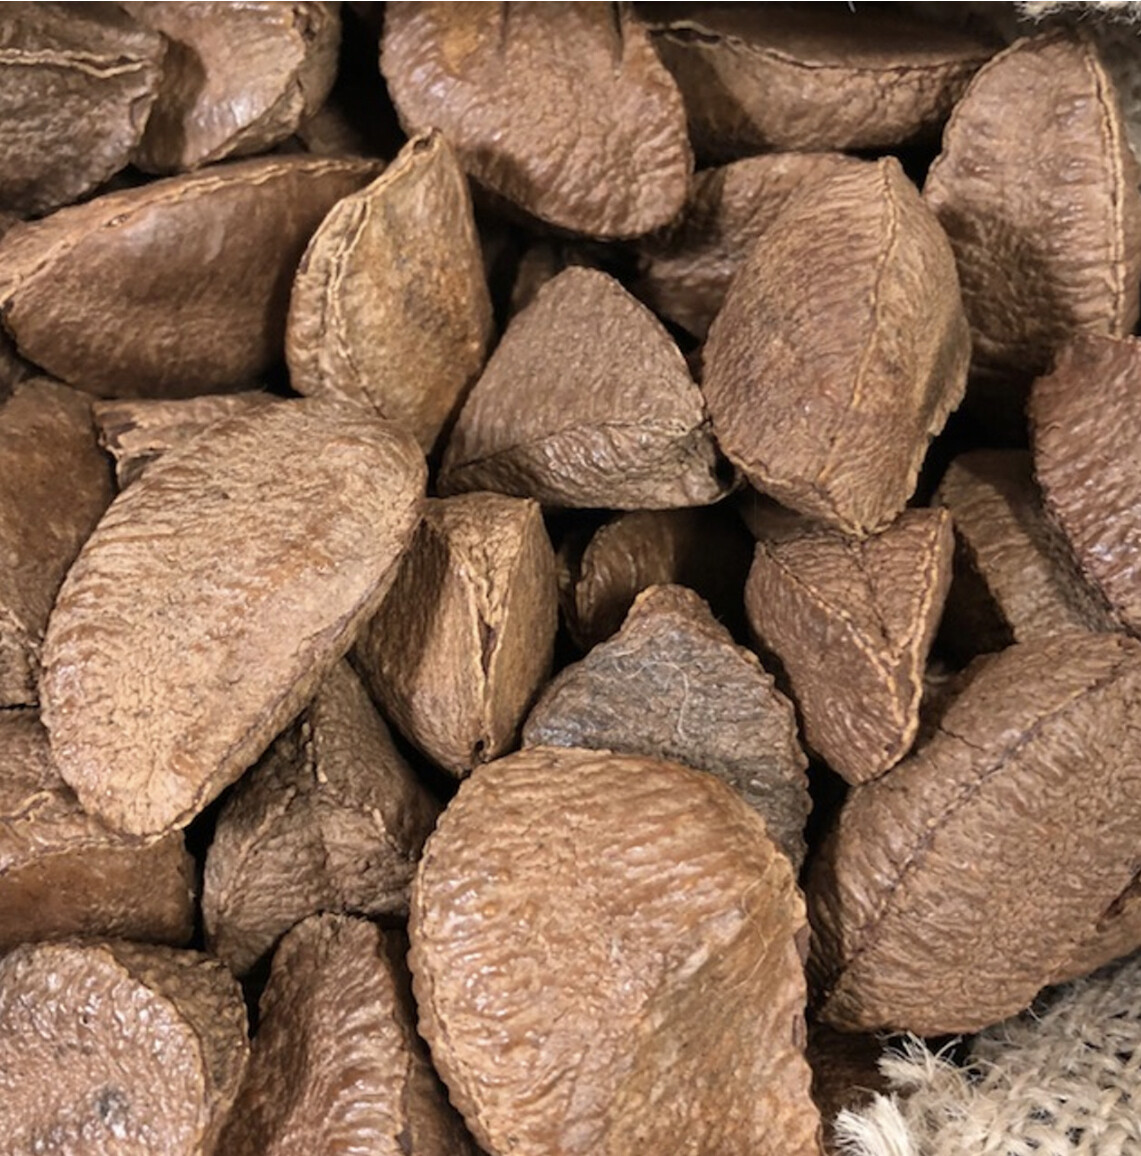 8 oz in shell Brazil nuts